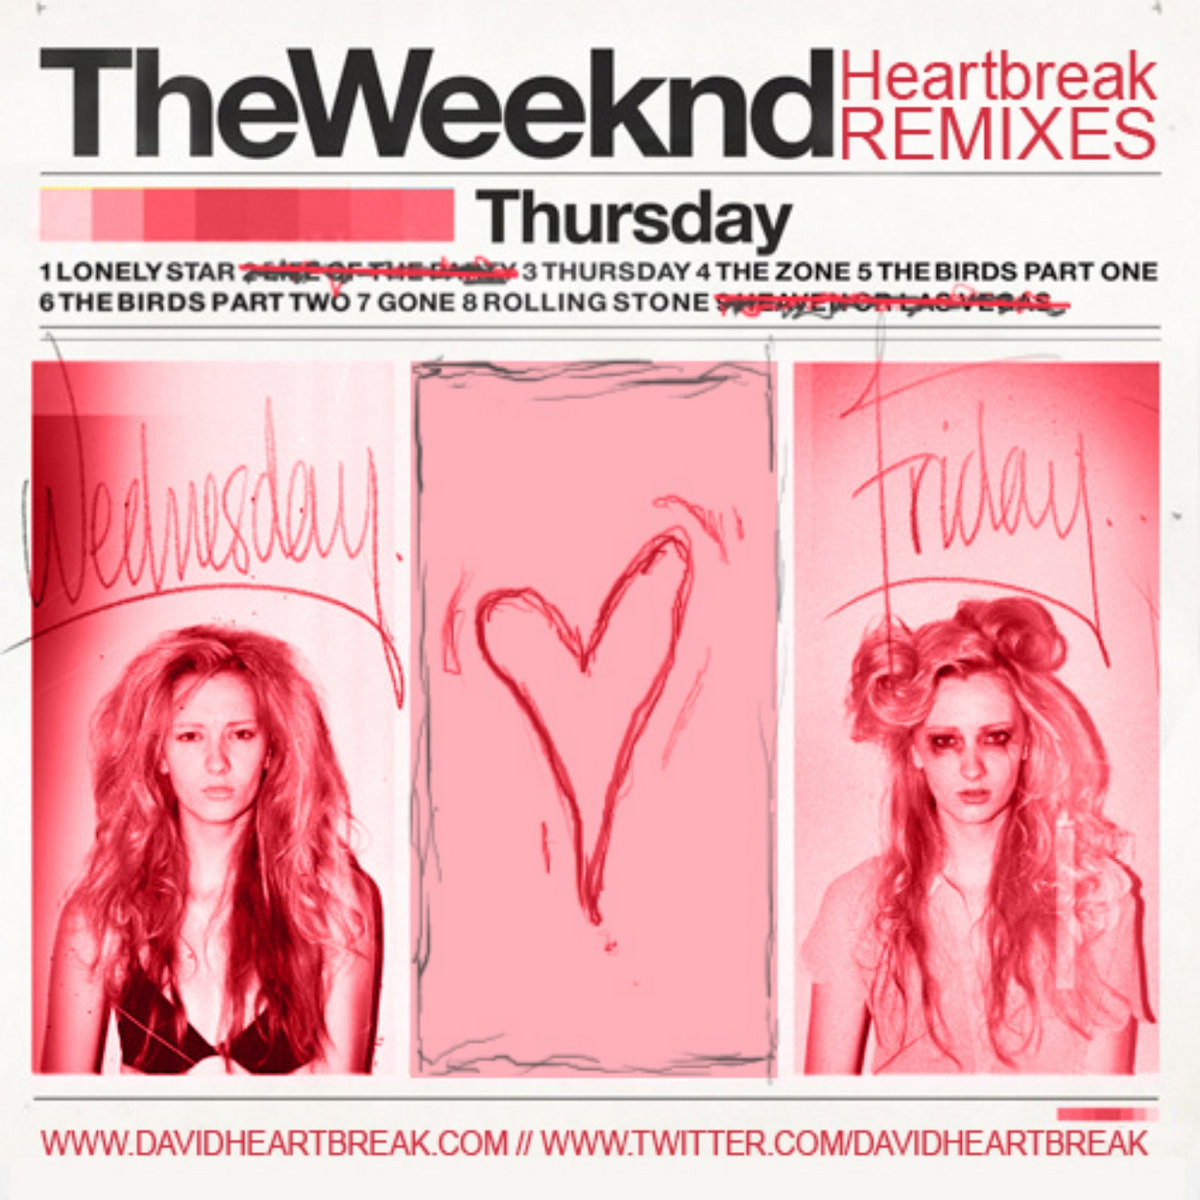 The Weeknd Thursday. Heartache перевод